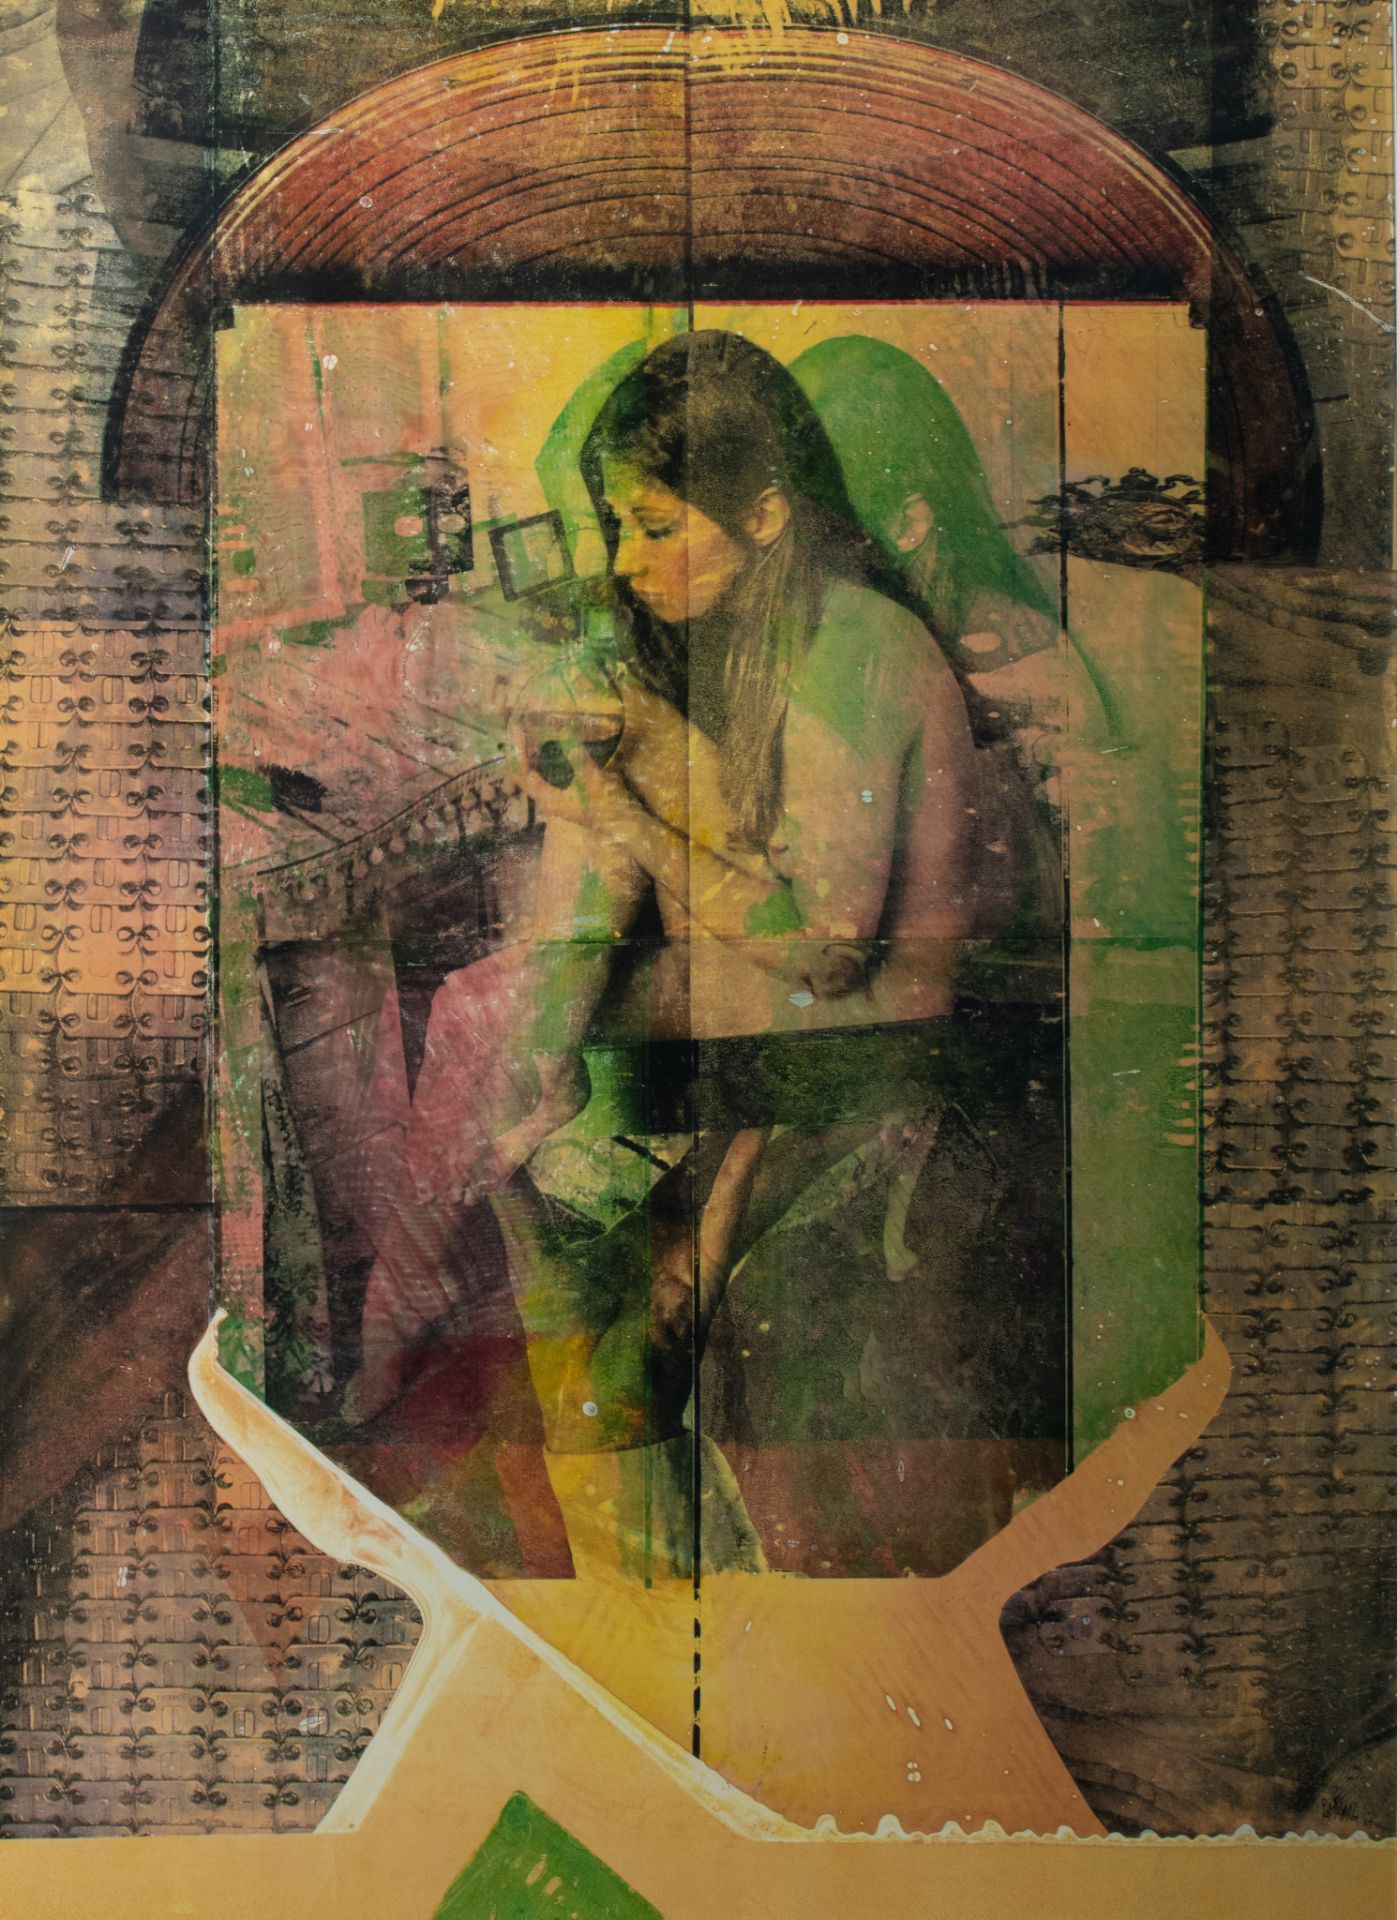 Pol Mara (1920-1998), Room service, mixed media on paper on panel, 1994, 95 x 129 cm